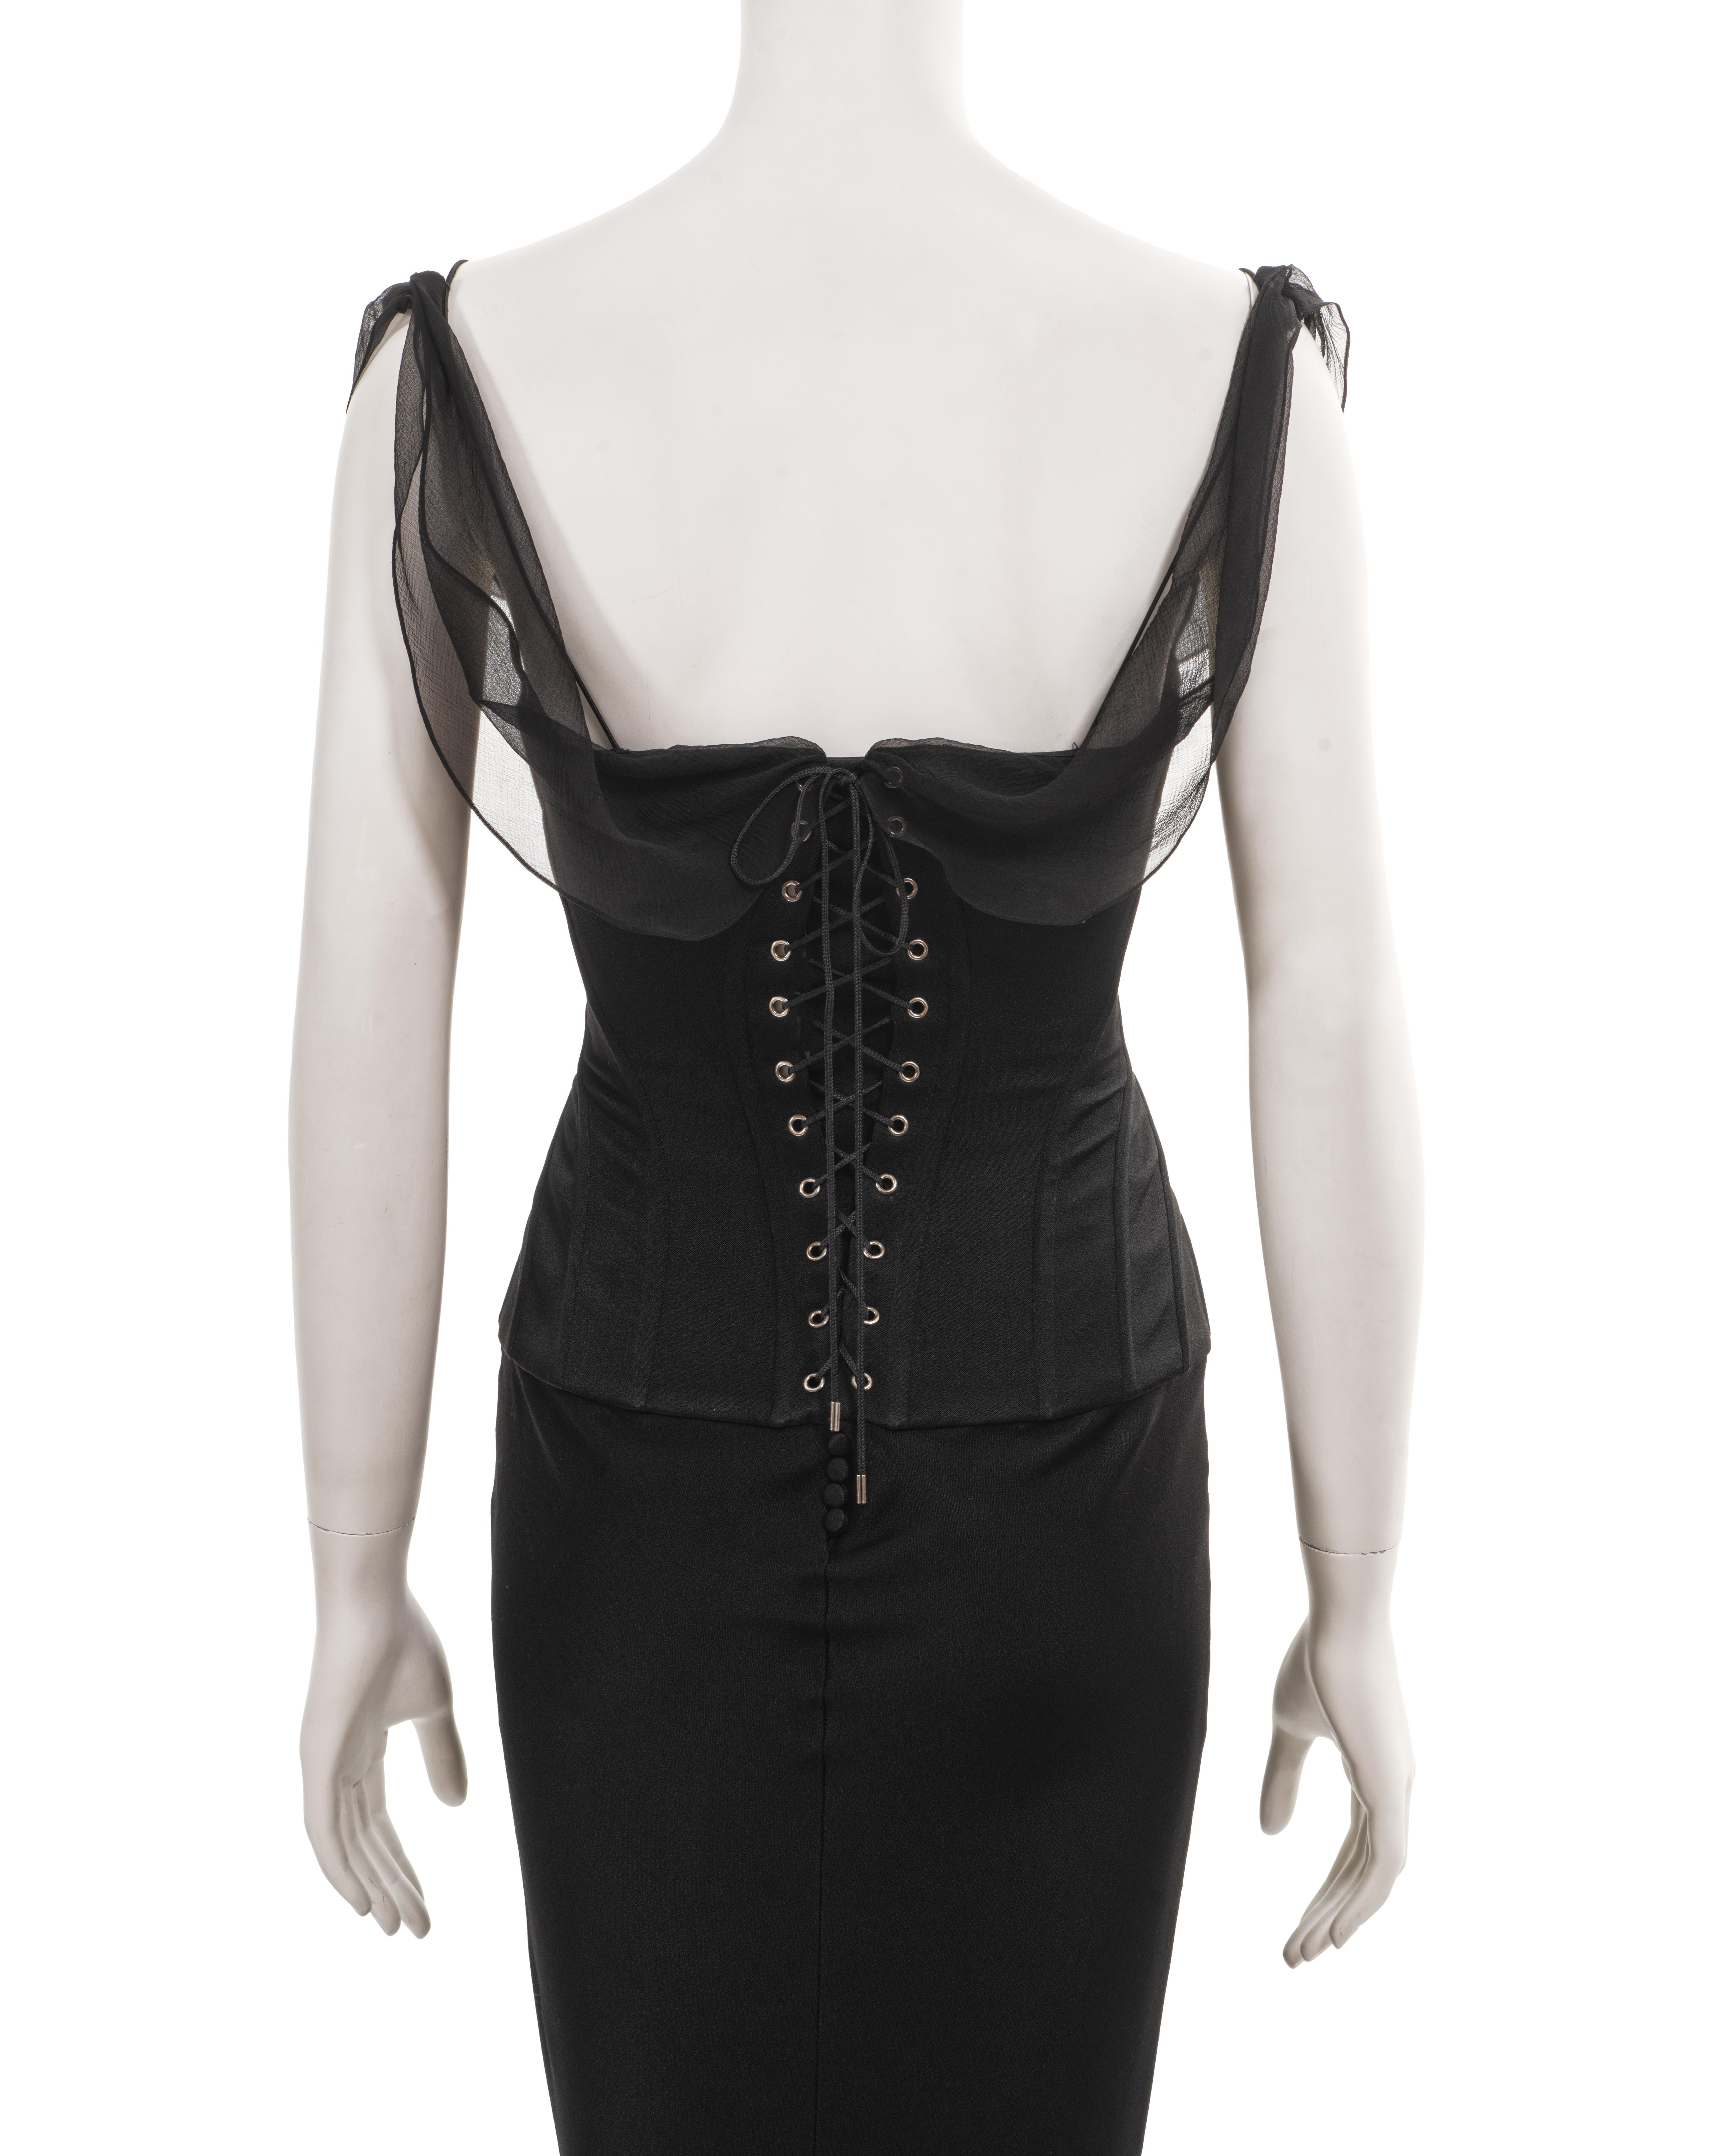 John Galliano black satin evening dress with integrated corset, ss 2003 3